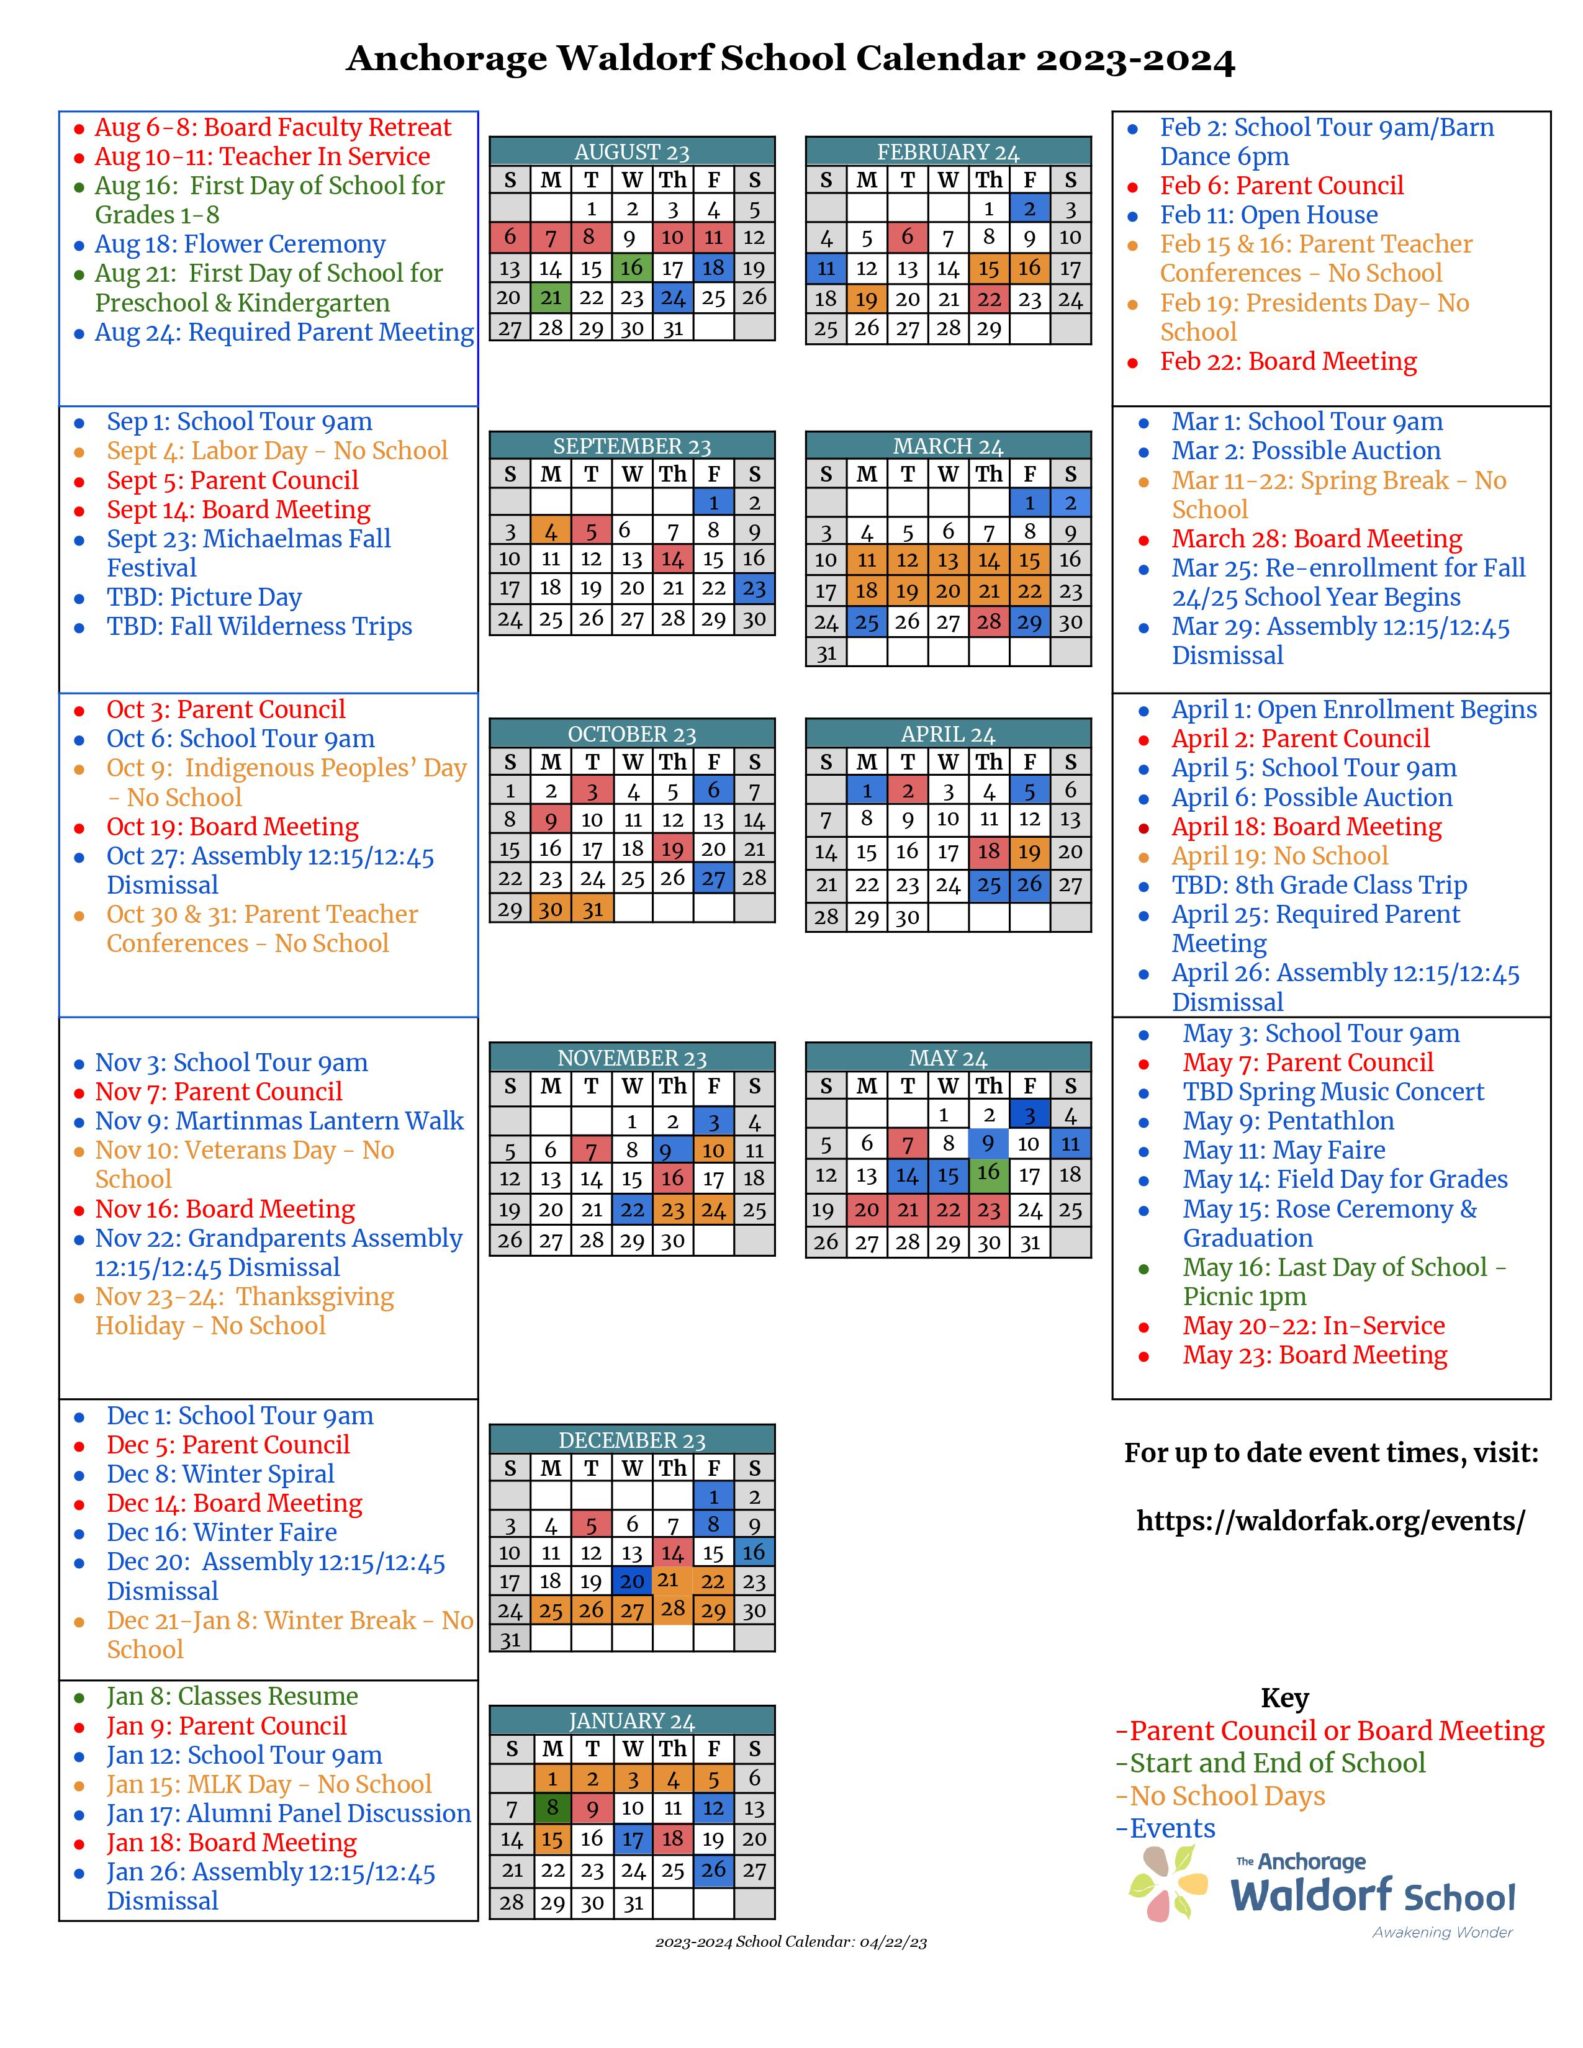 School Calendar – Anchorage Waldorf School